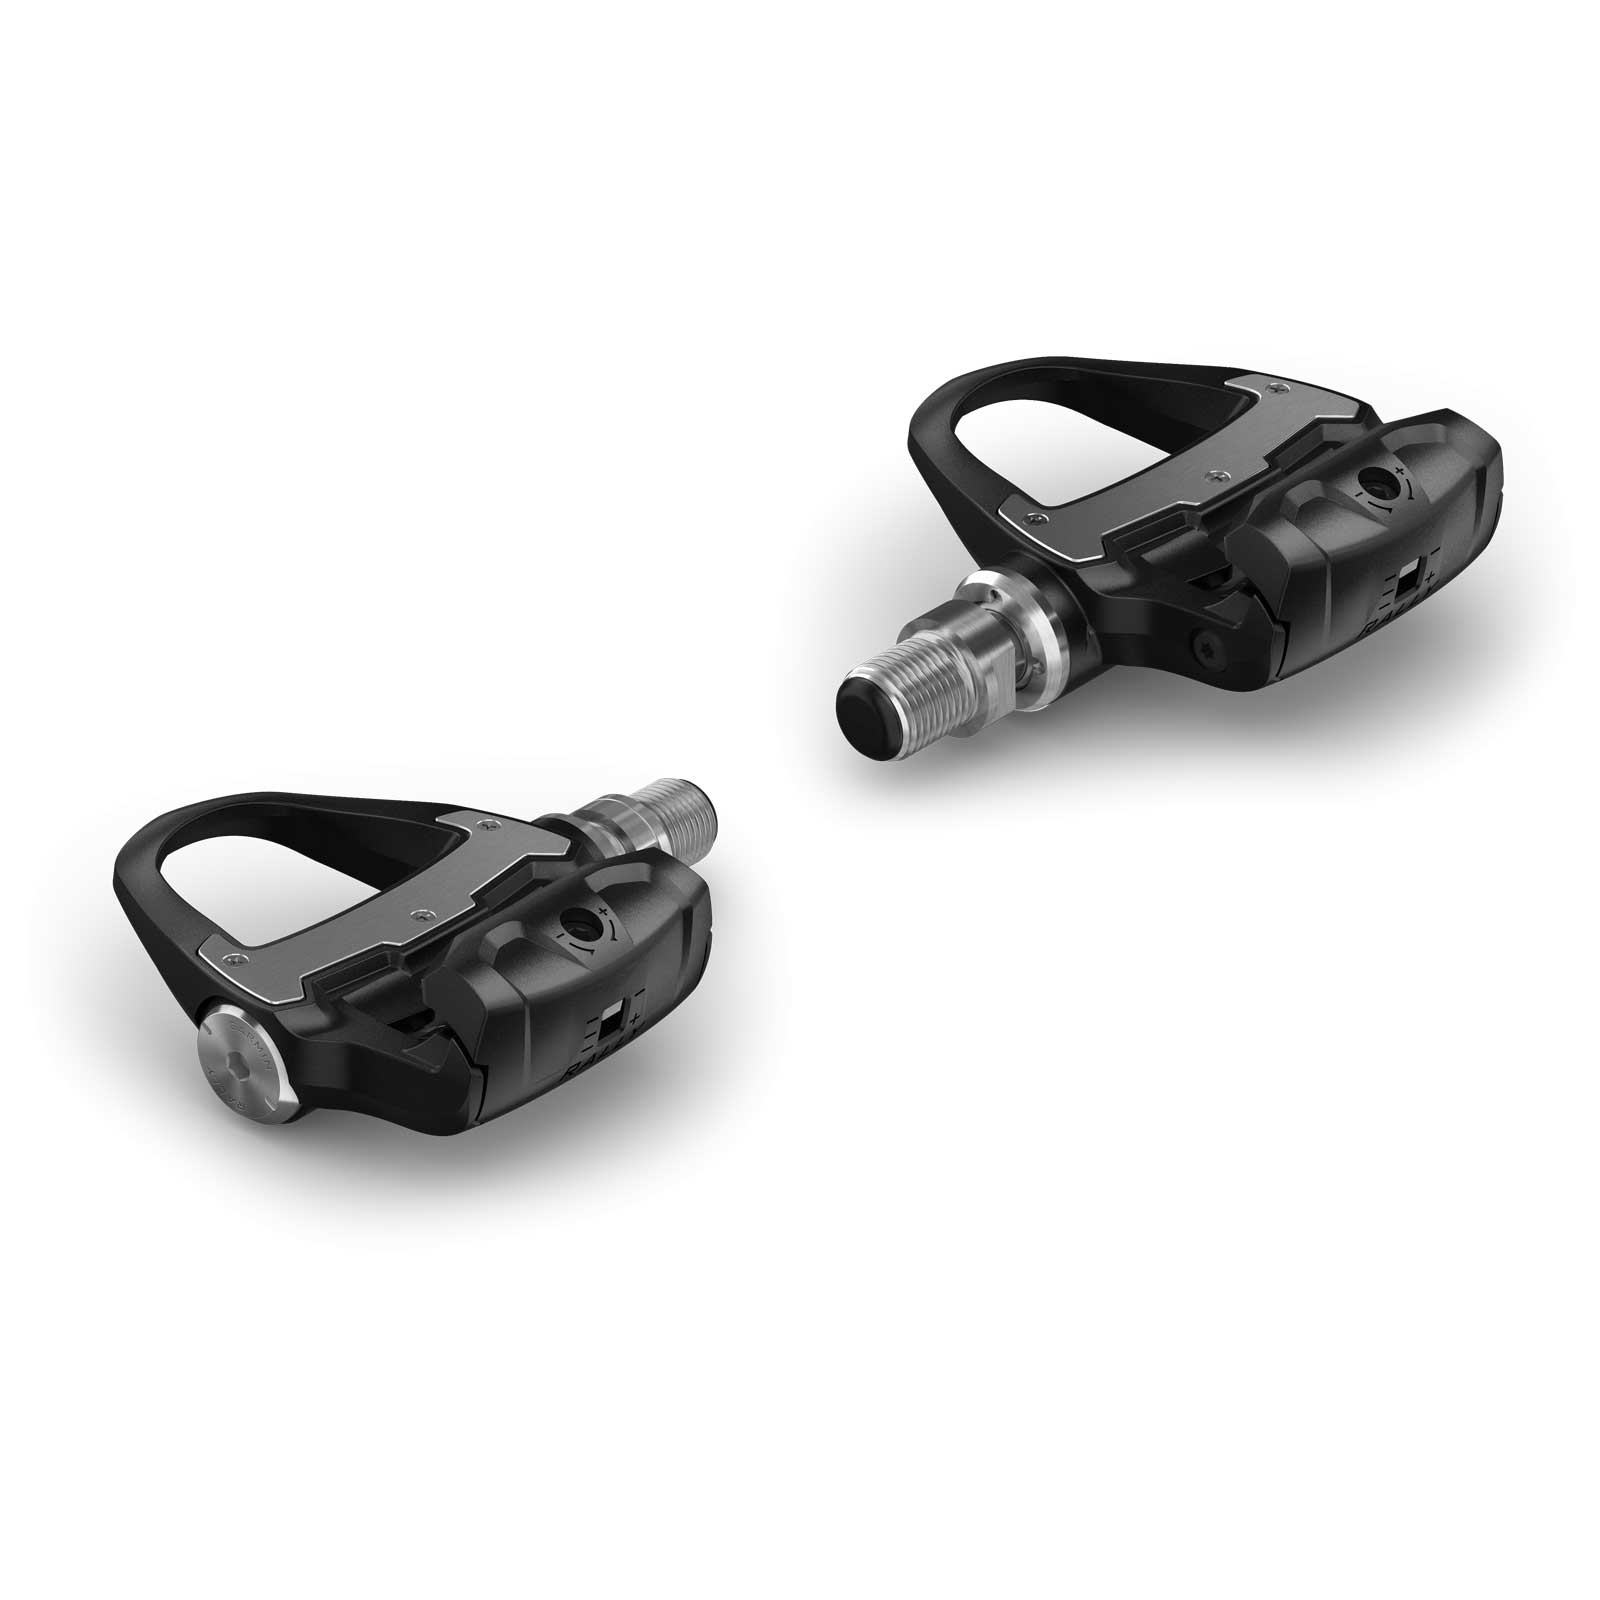 Picture of Garmin Rally RS100 Pedal-Based Single-Sensing Power Meter - black